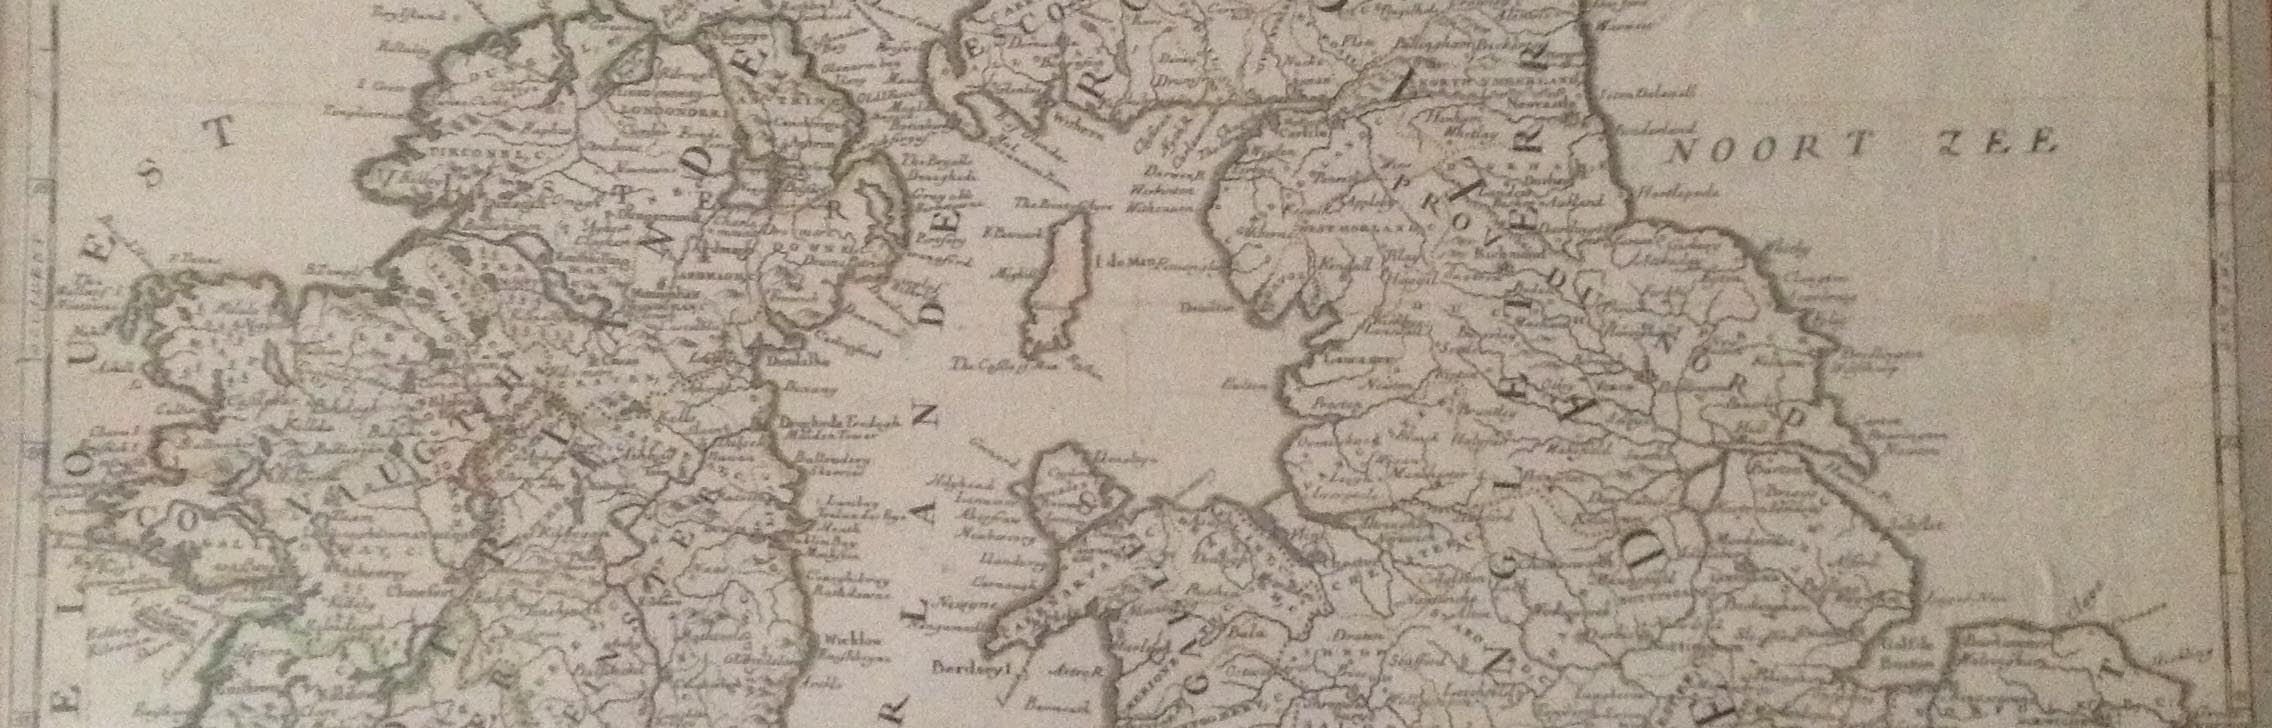 English images of Ireland - exploring a medieval  manuscript